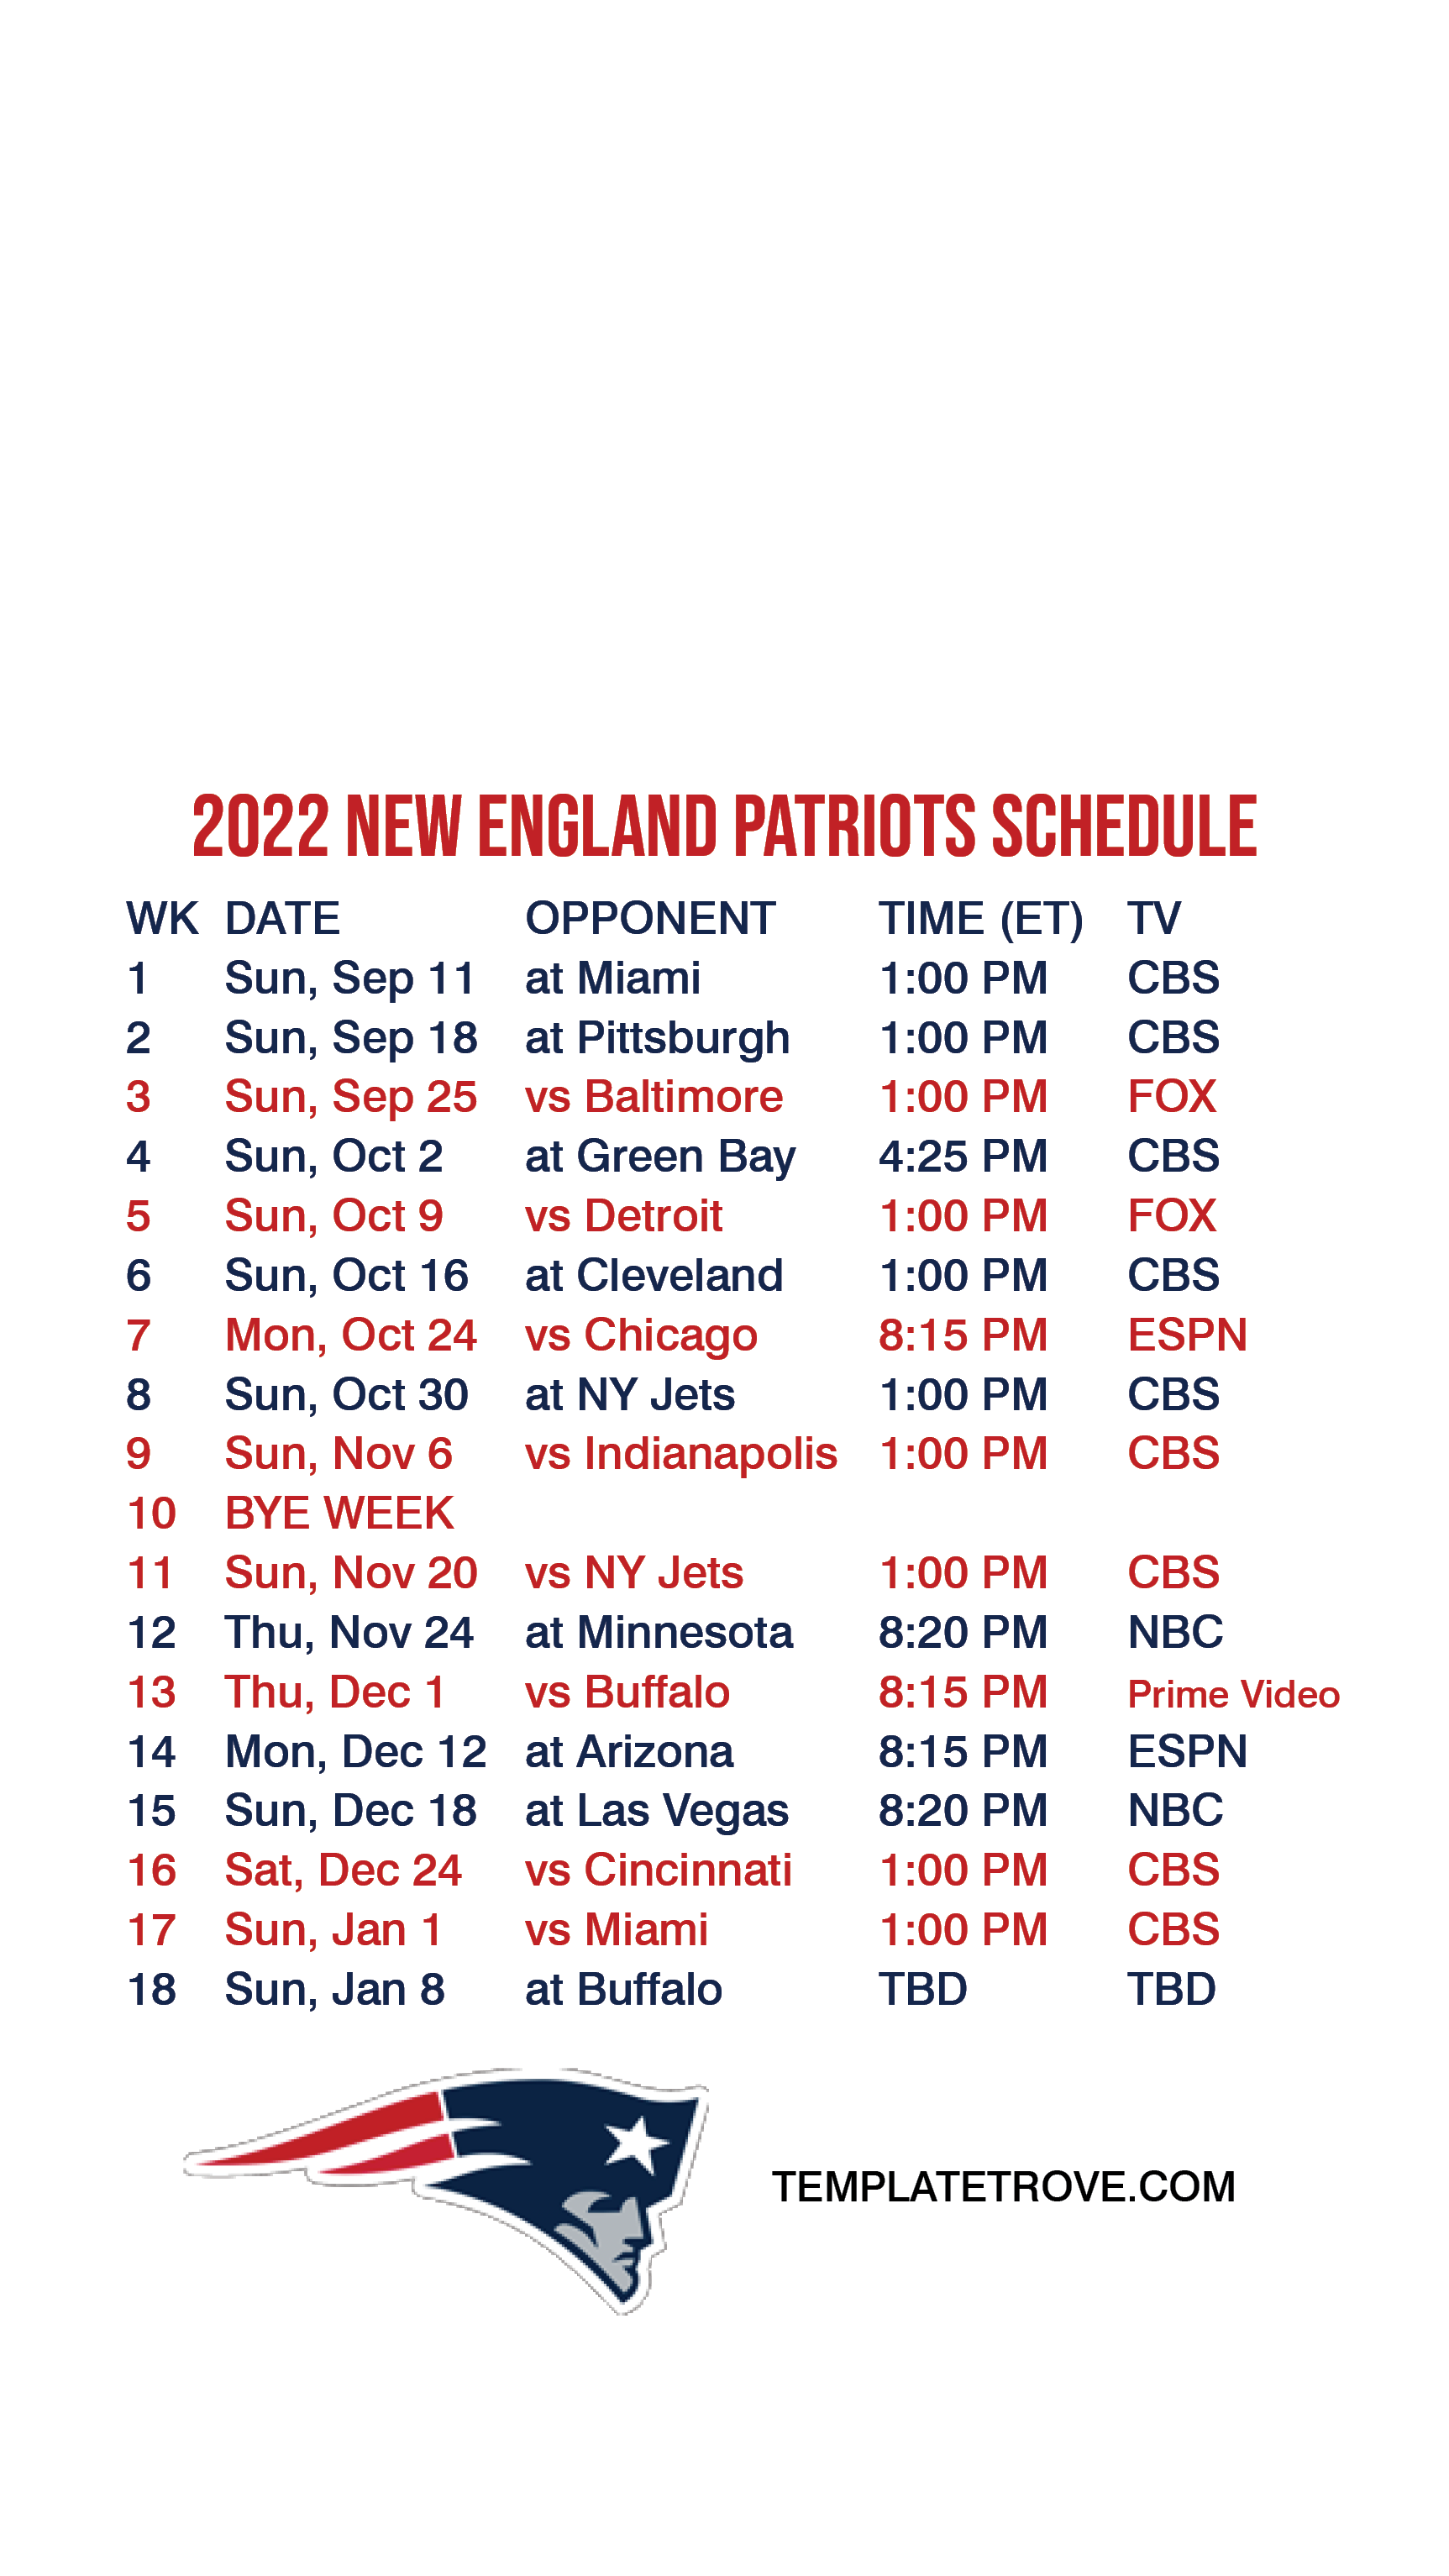 2022 patriots schedule